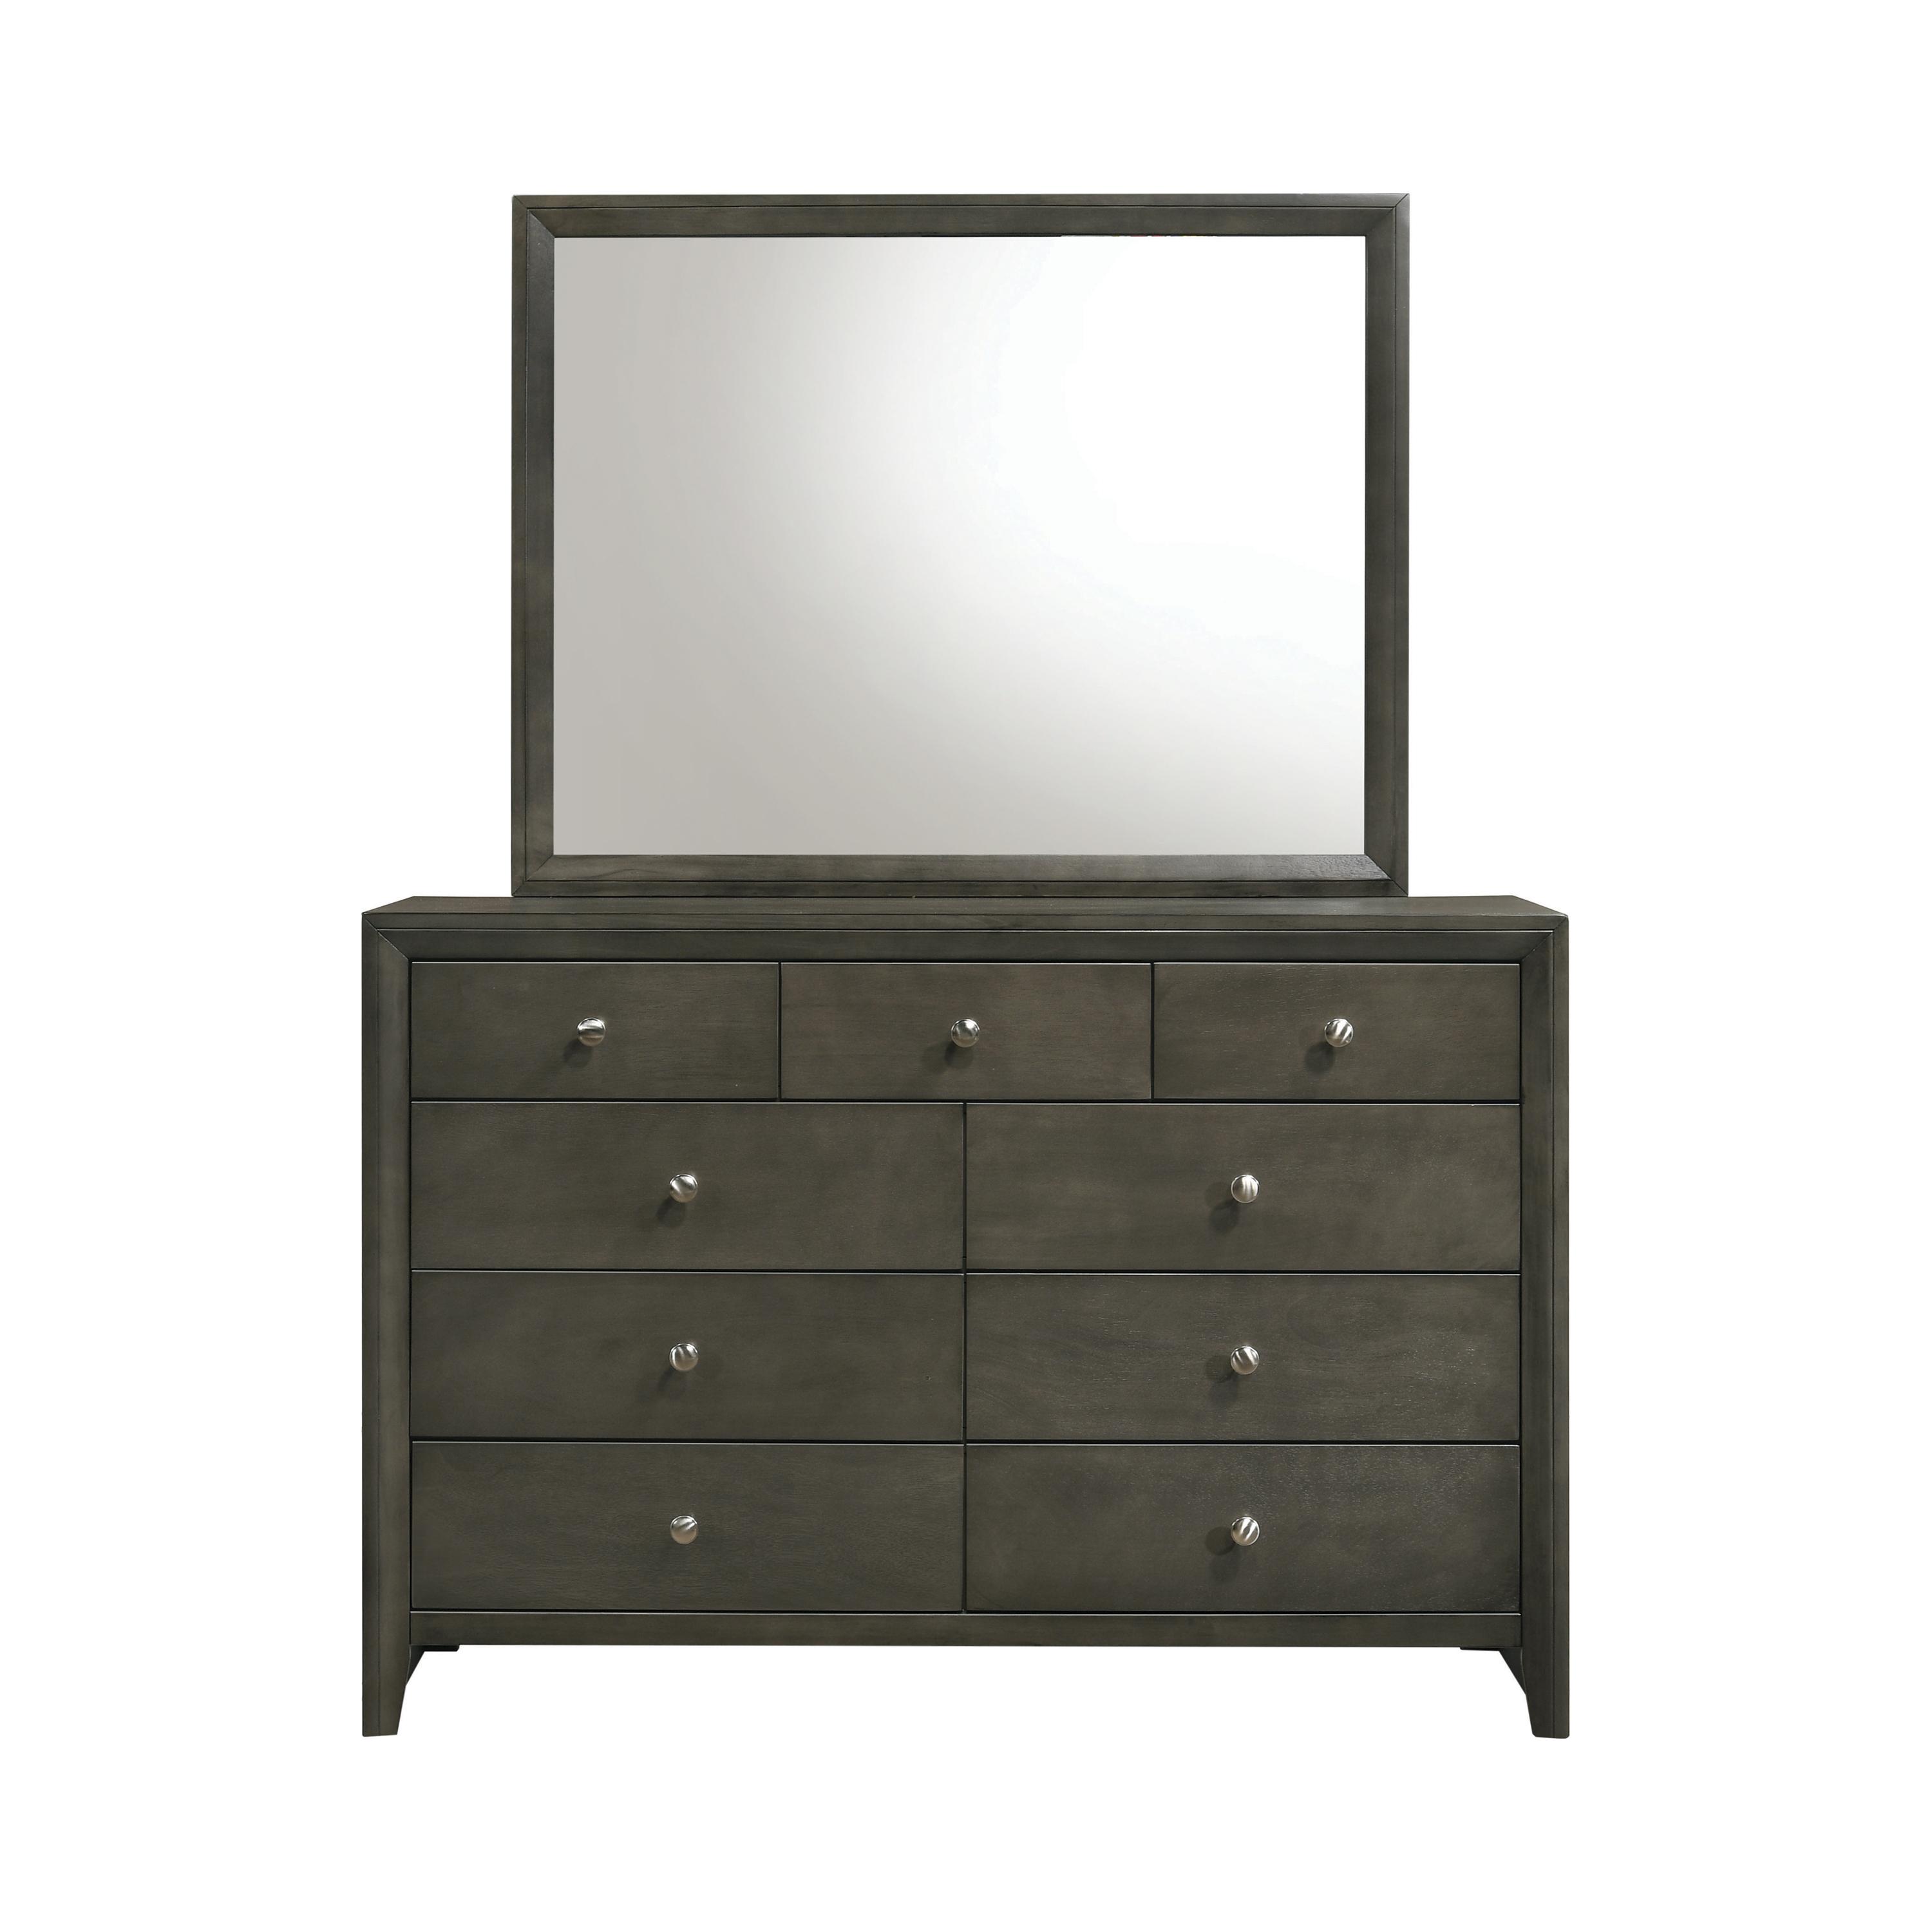 Transitional Dresser w/Mirror 215843-2PC Serenity 215843-2PC in Gray 